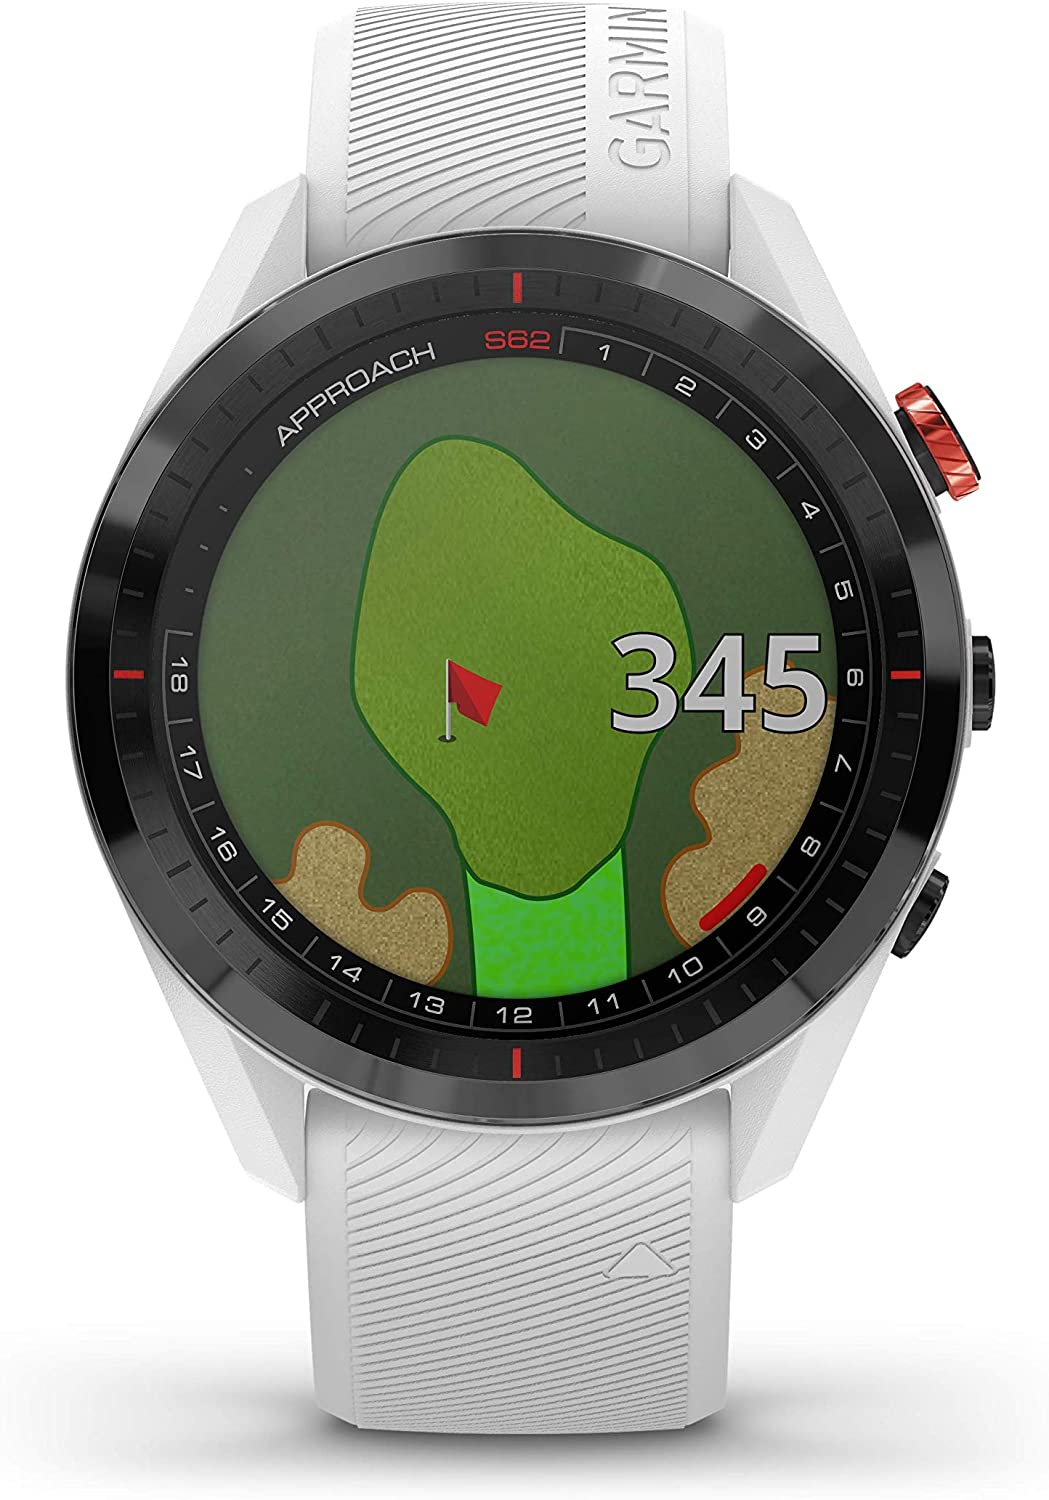 Garmin Approach S62, Premium Golf GPS Watch, Built-in Virtual Caddie